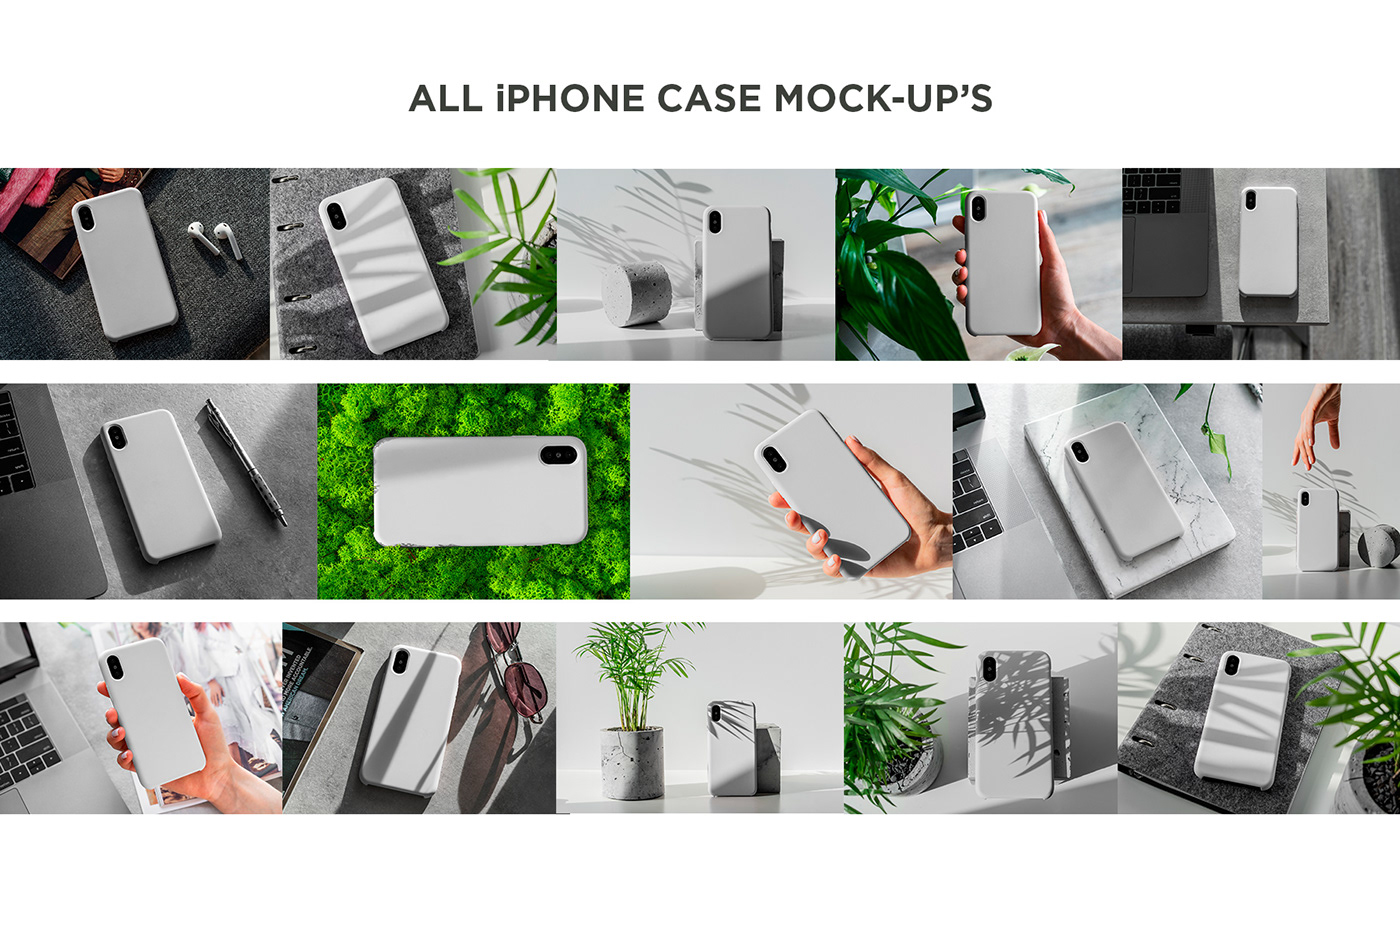 Mockup mock-up design workspace iphone case print templates smart-object